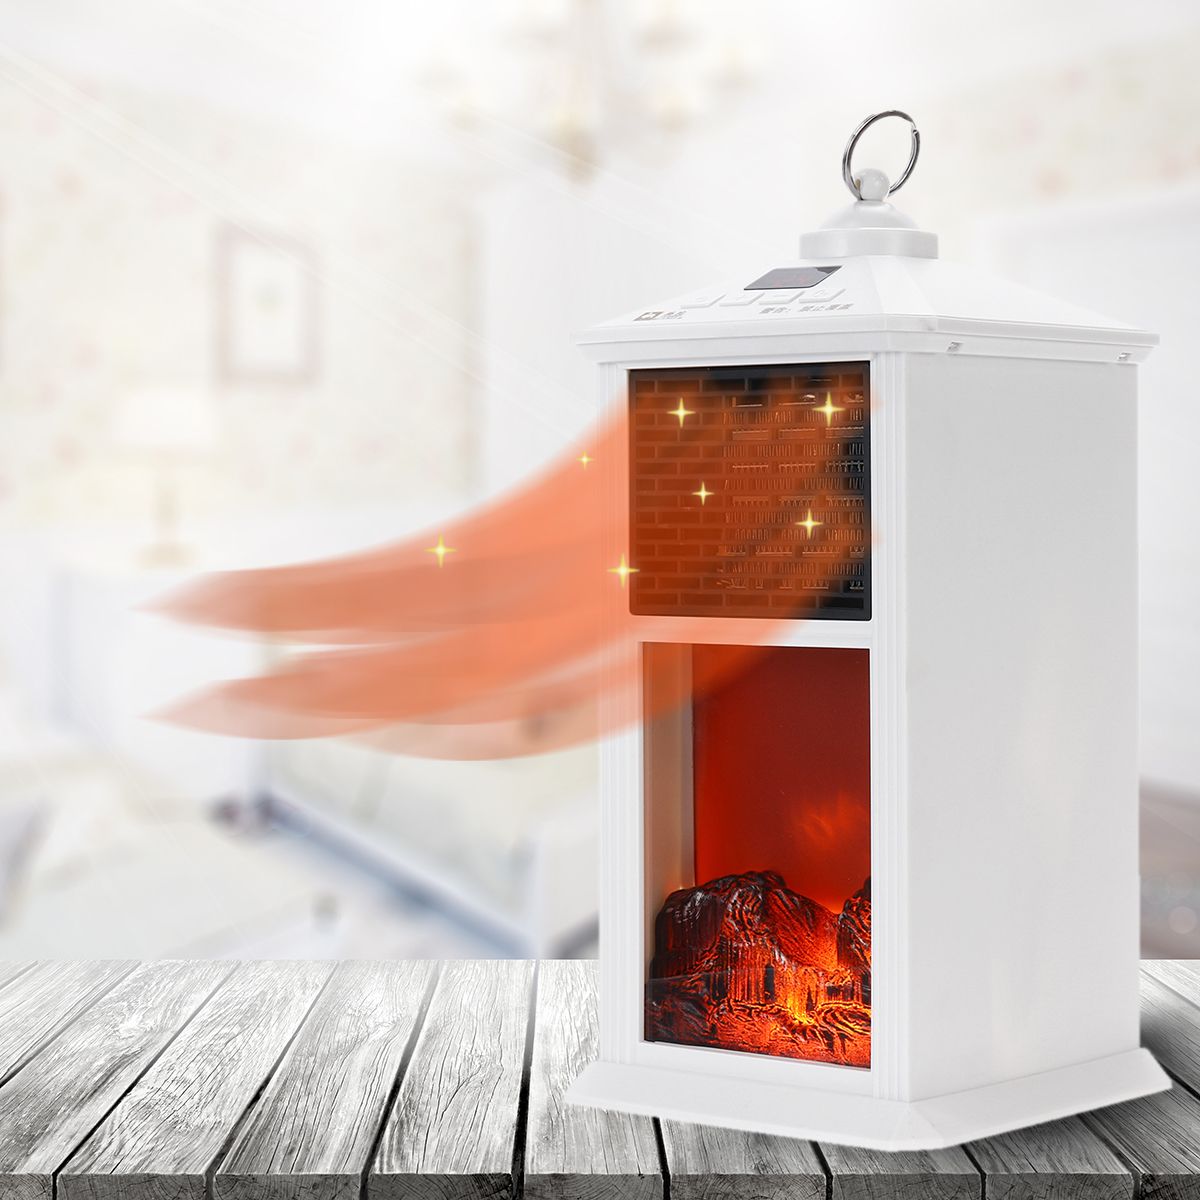 800W-3D-Emulation-Electric-Fireplace-Fire-Wood-Flame-Heater-Stove-Log-Burner-Remote-Control-Removabl-1619150